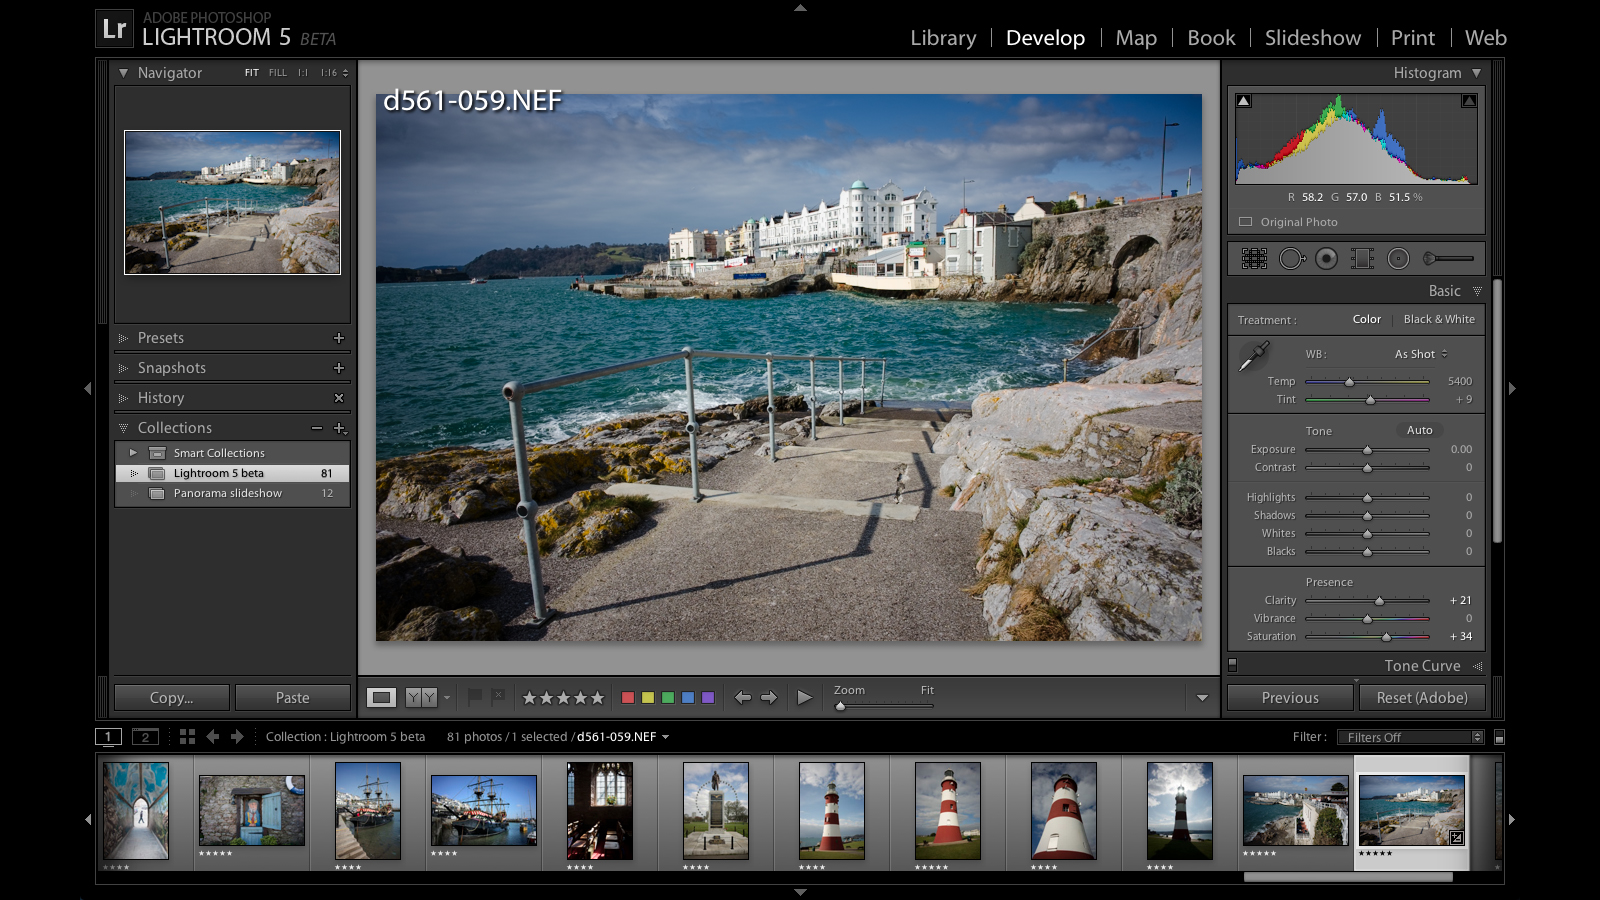 Adobe Photoshop Lightroom 5 review | TechRadar